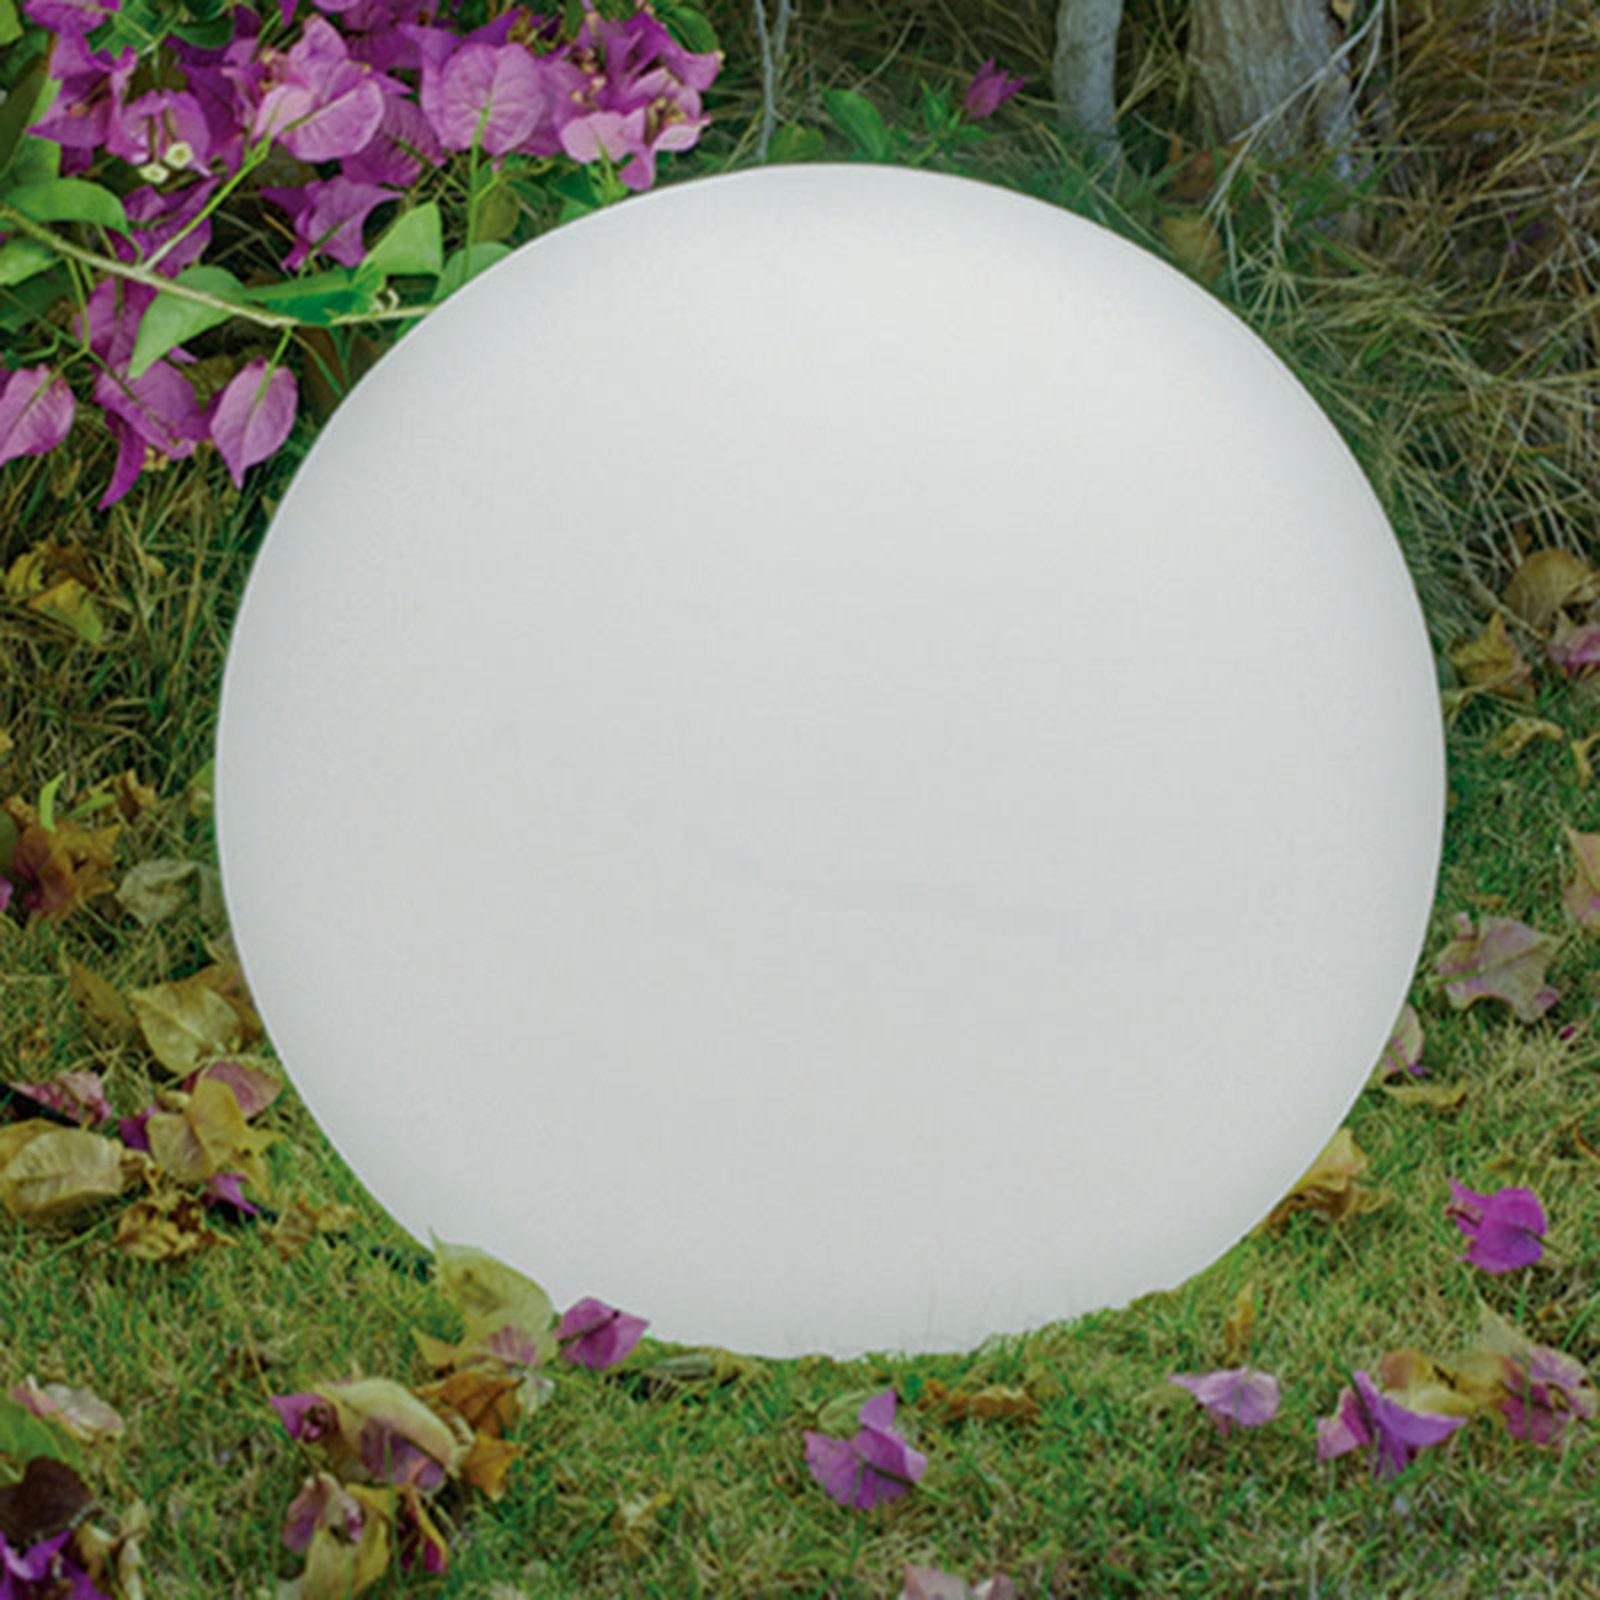 Newgarden Buly piantana a sfera, Ø 40 cm